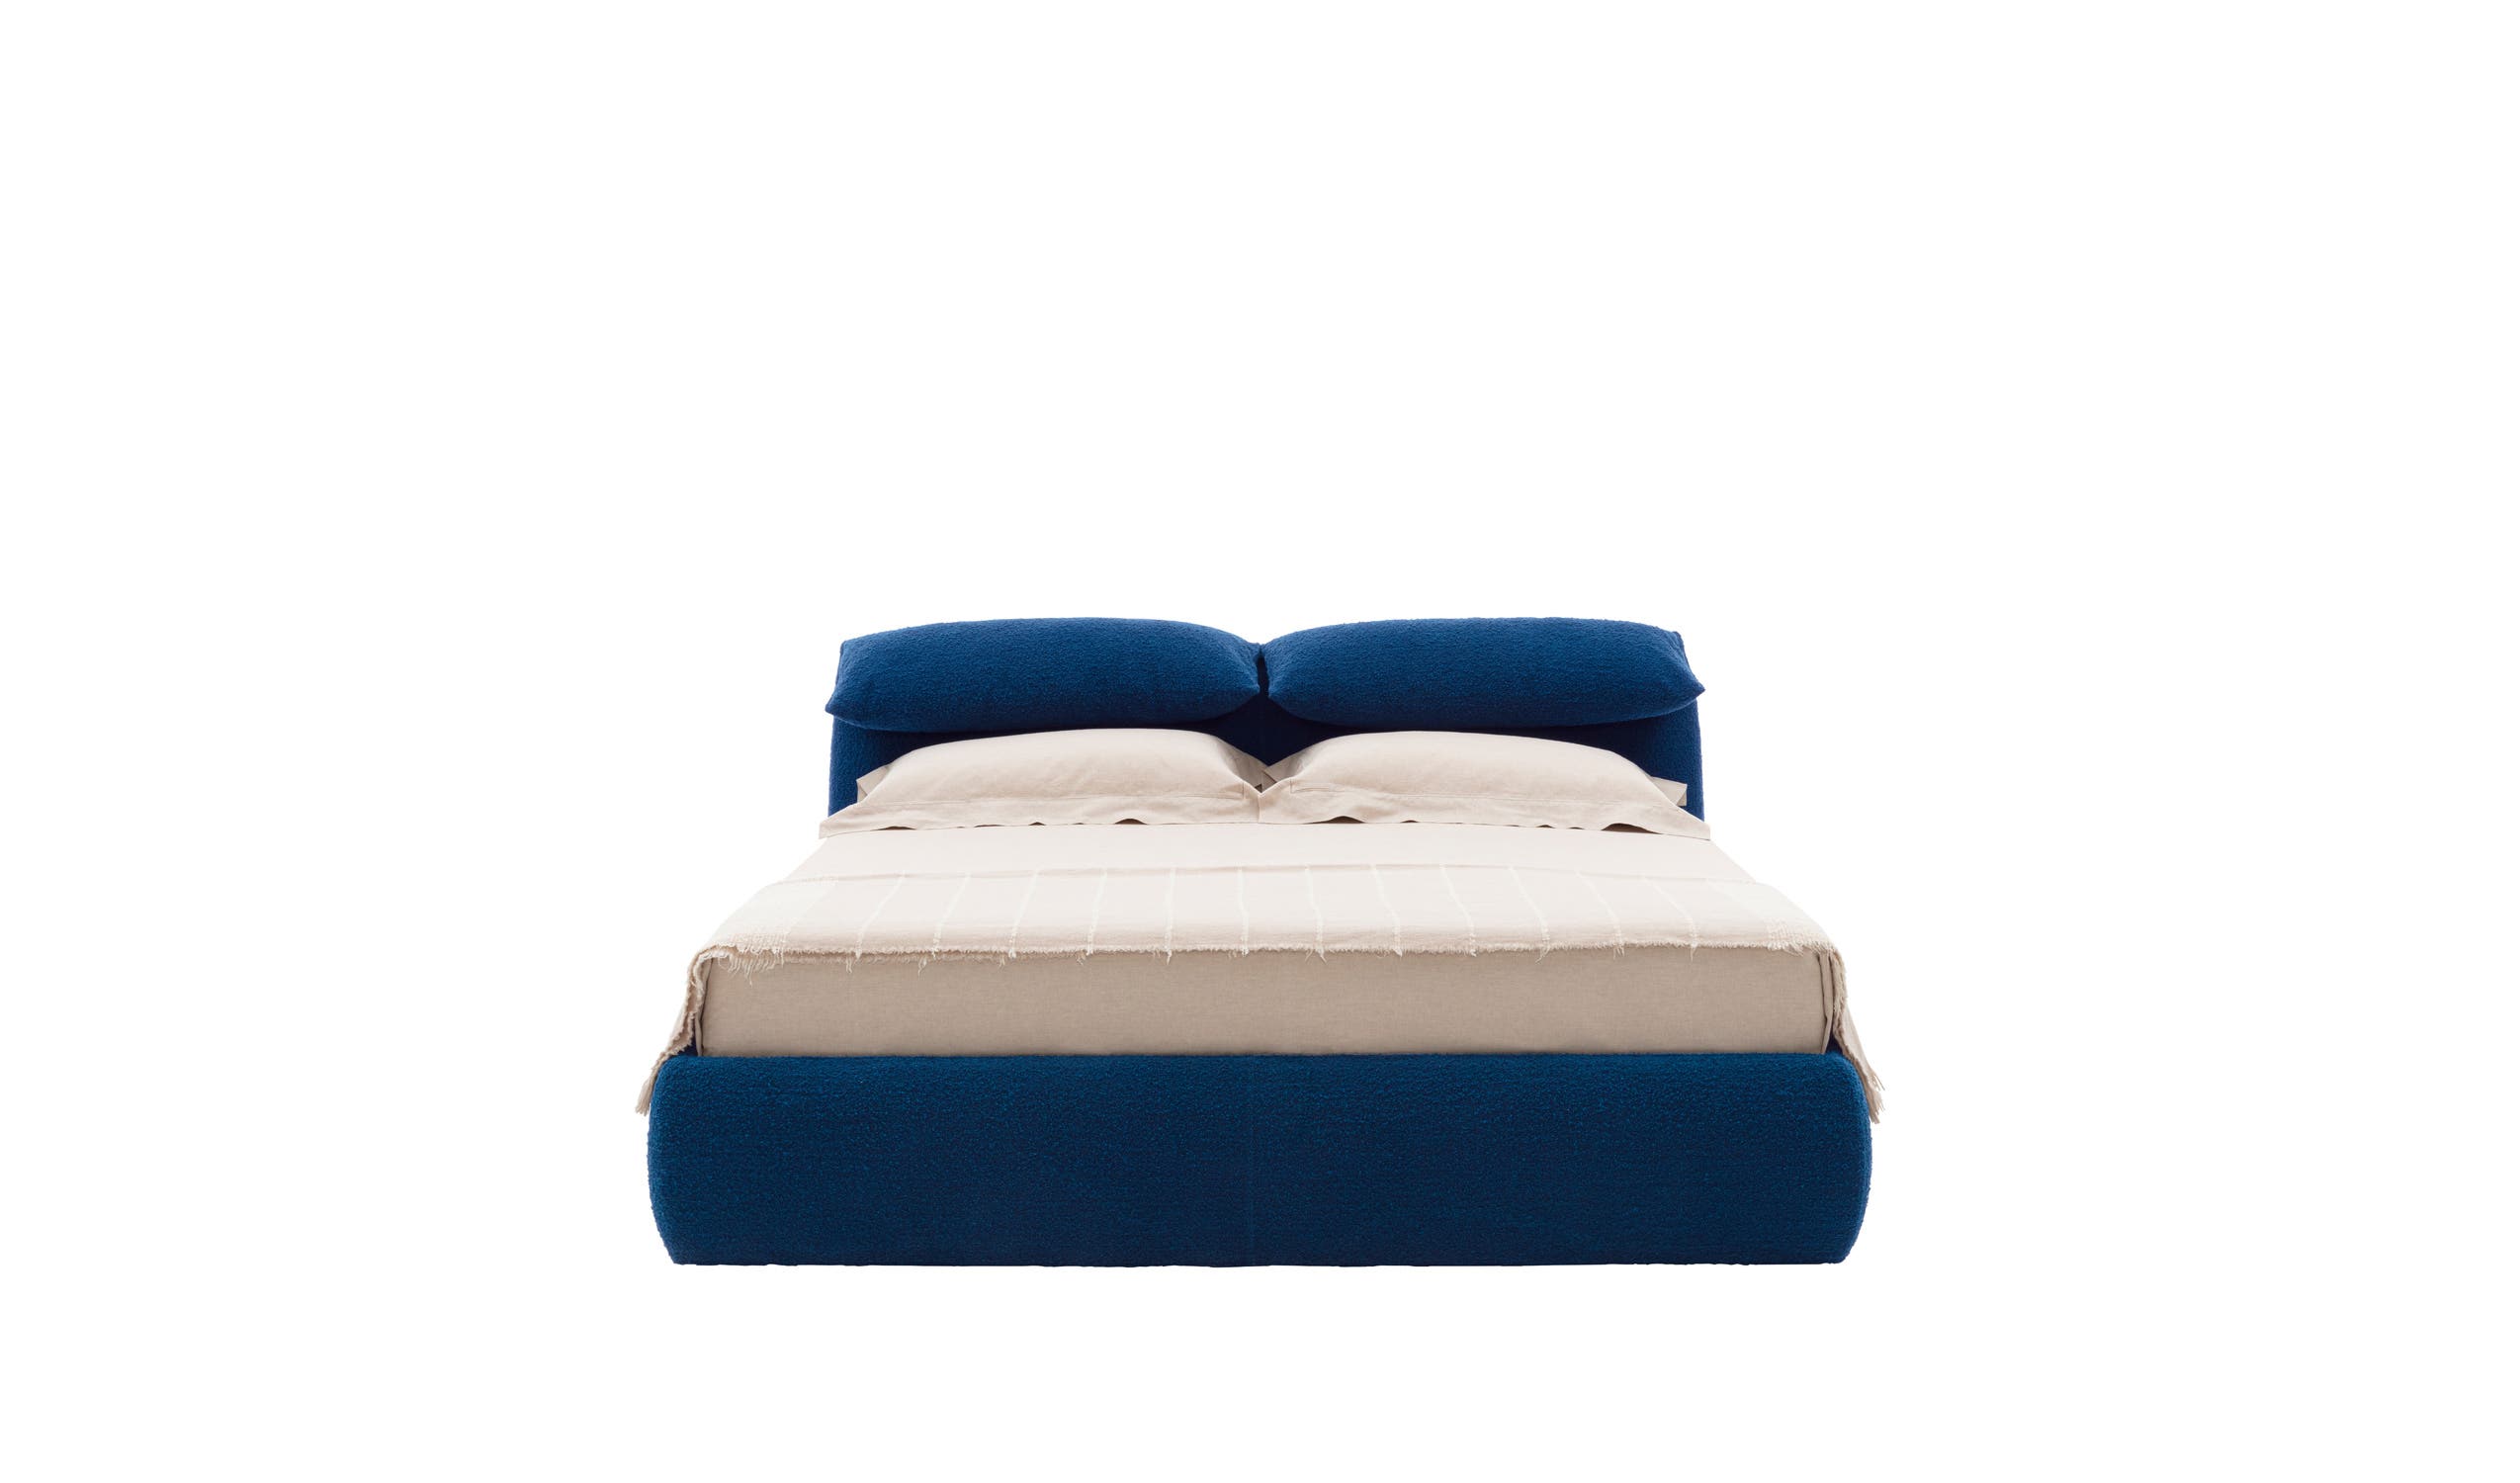 Designer Italian modern beds - Bamboletto Beds 2